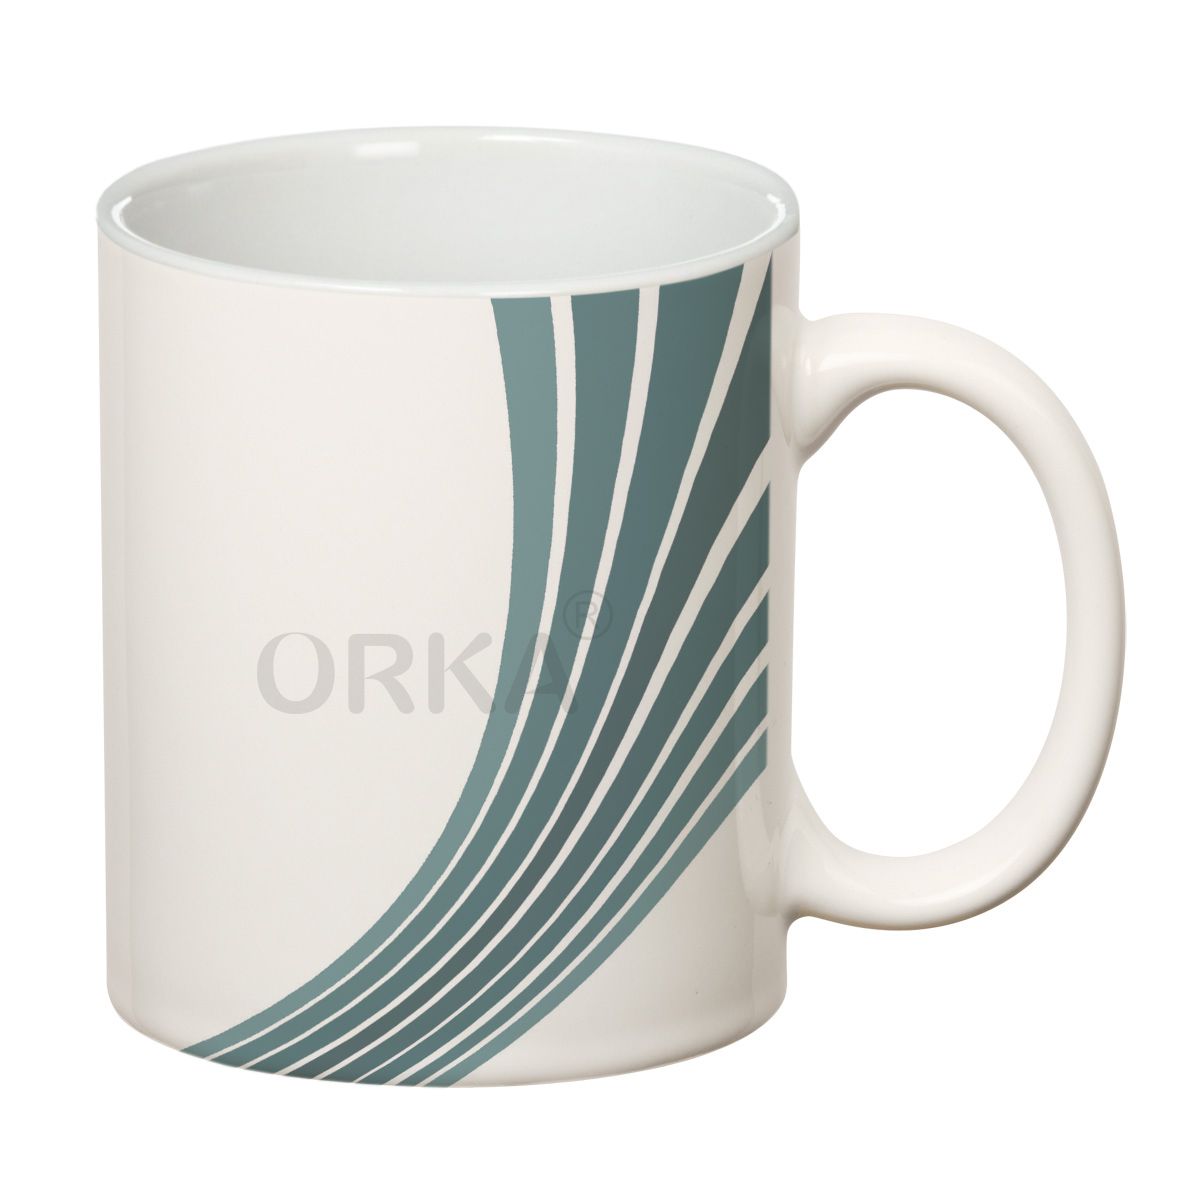 ORKA Coffee Mug Printed 11 Oz   